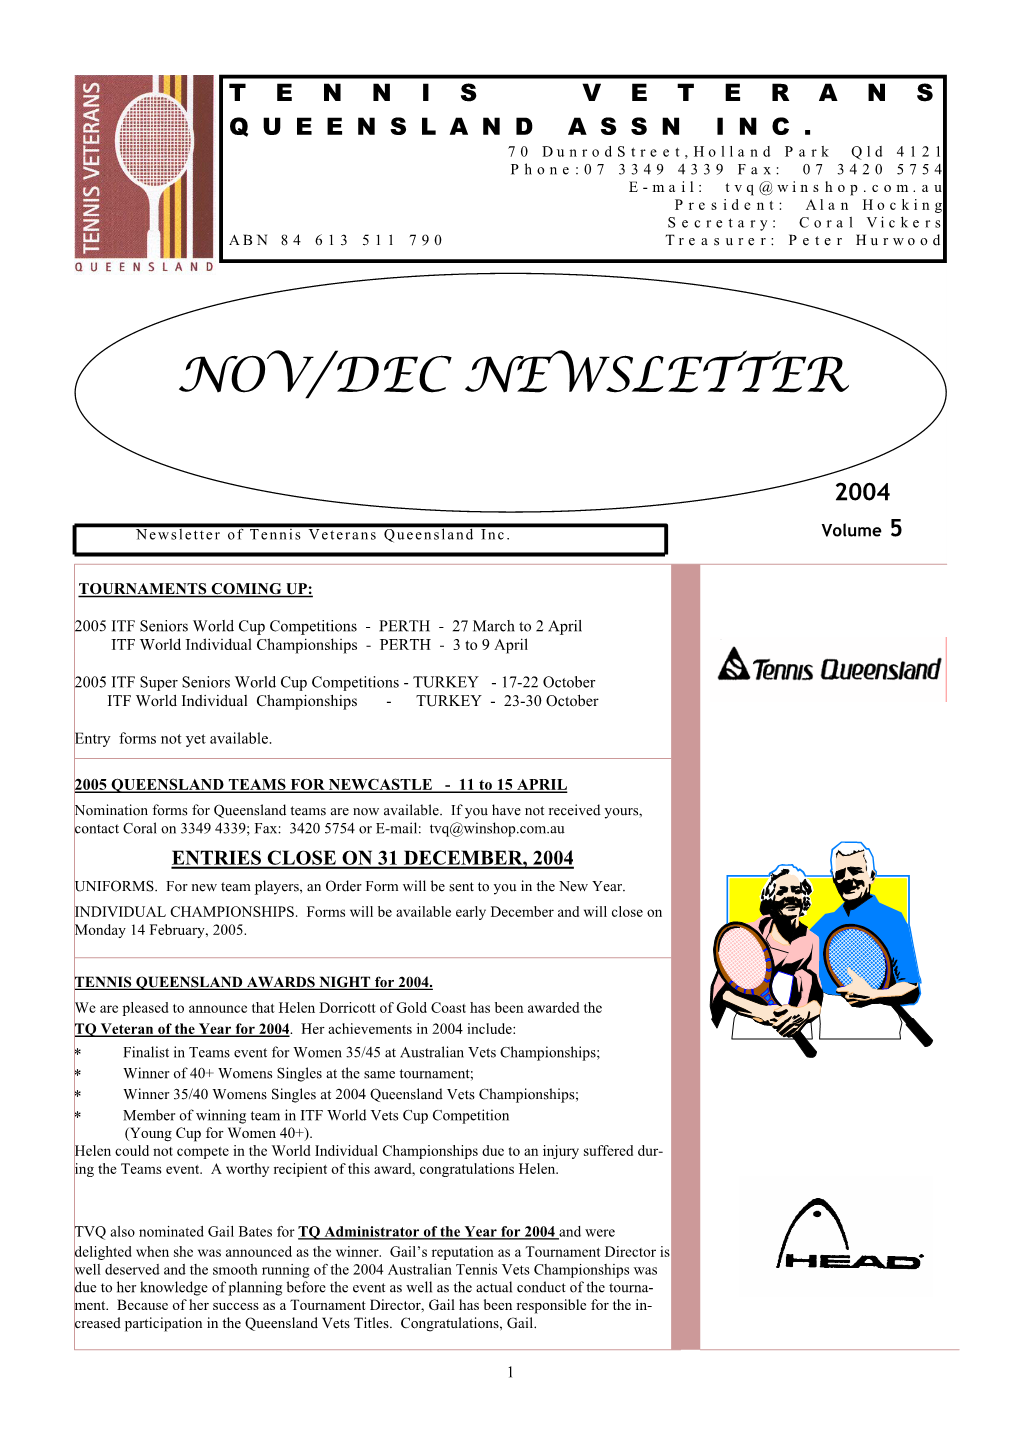 Qld NOV-DEC NEWSLETTER 2004-5.Pub